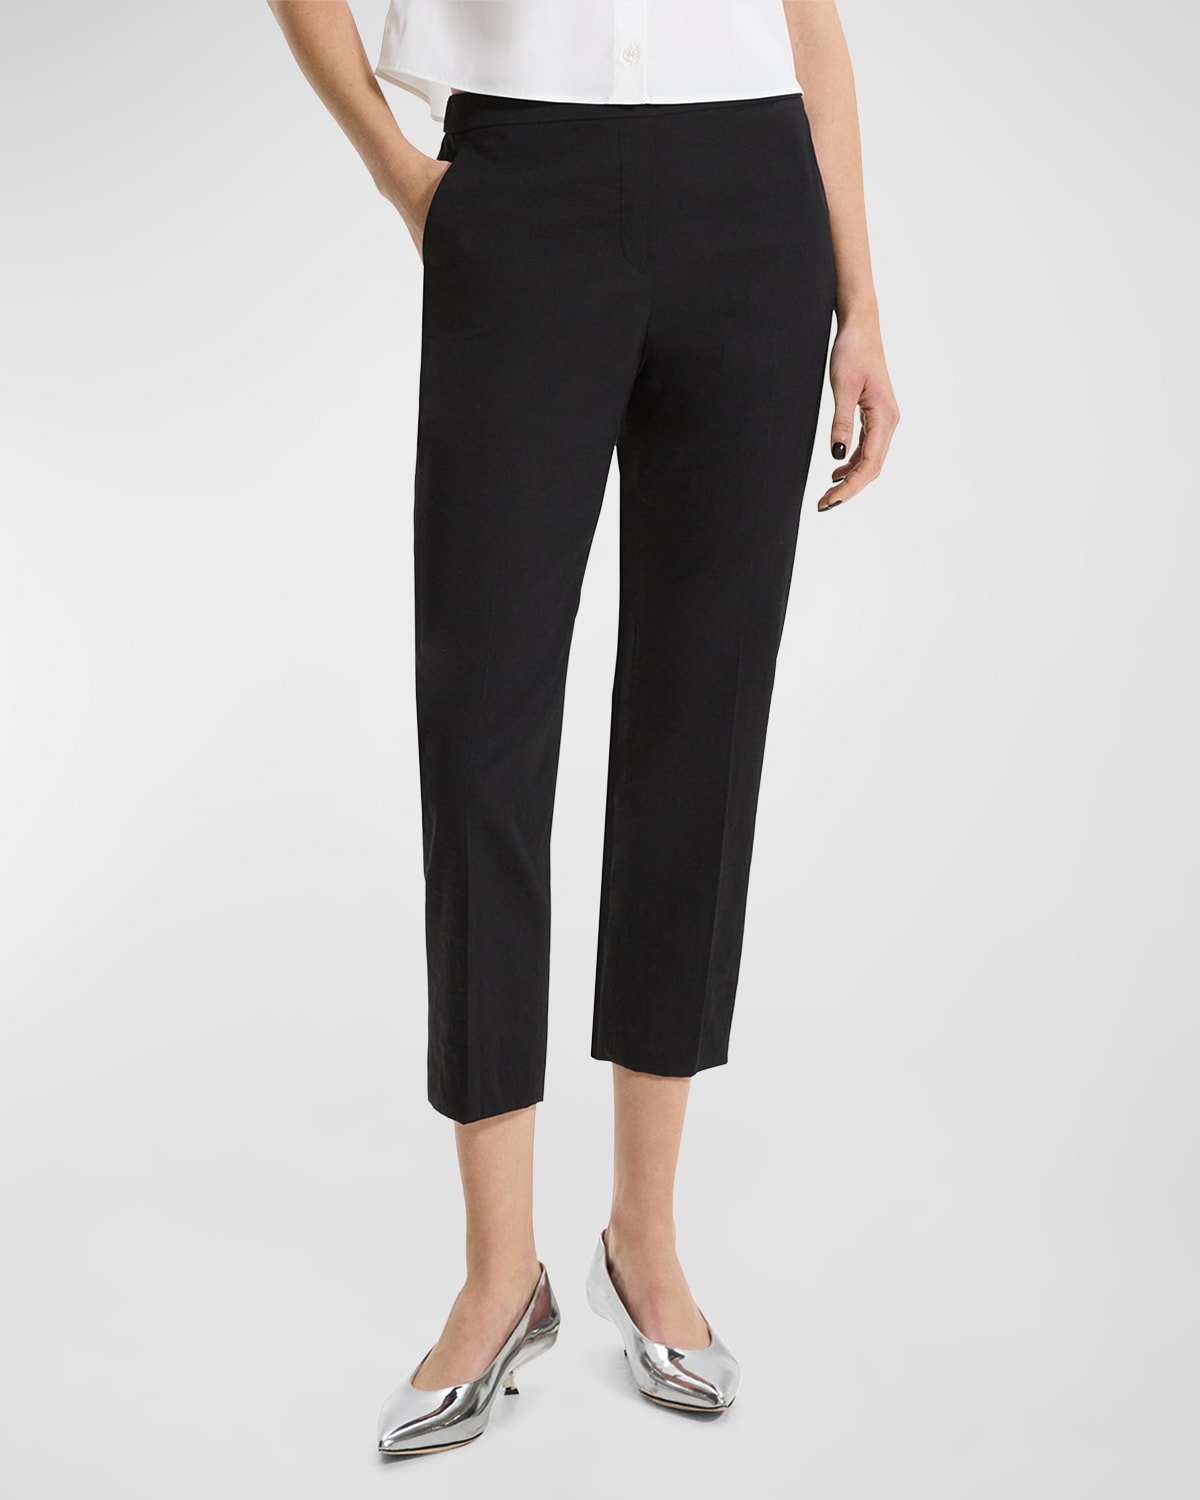 Plus Size Women's Dress Pants Pull-On Textured Geometric Crop Black Color Pants 